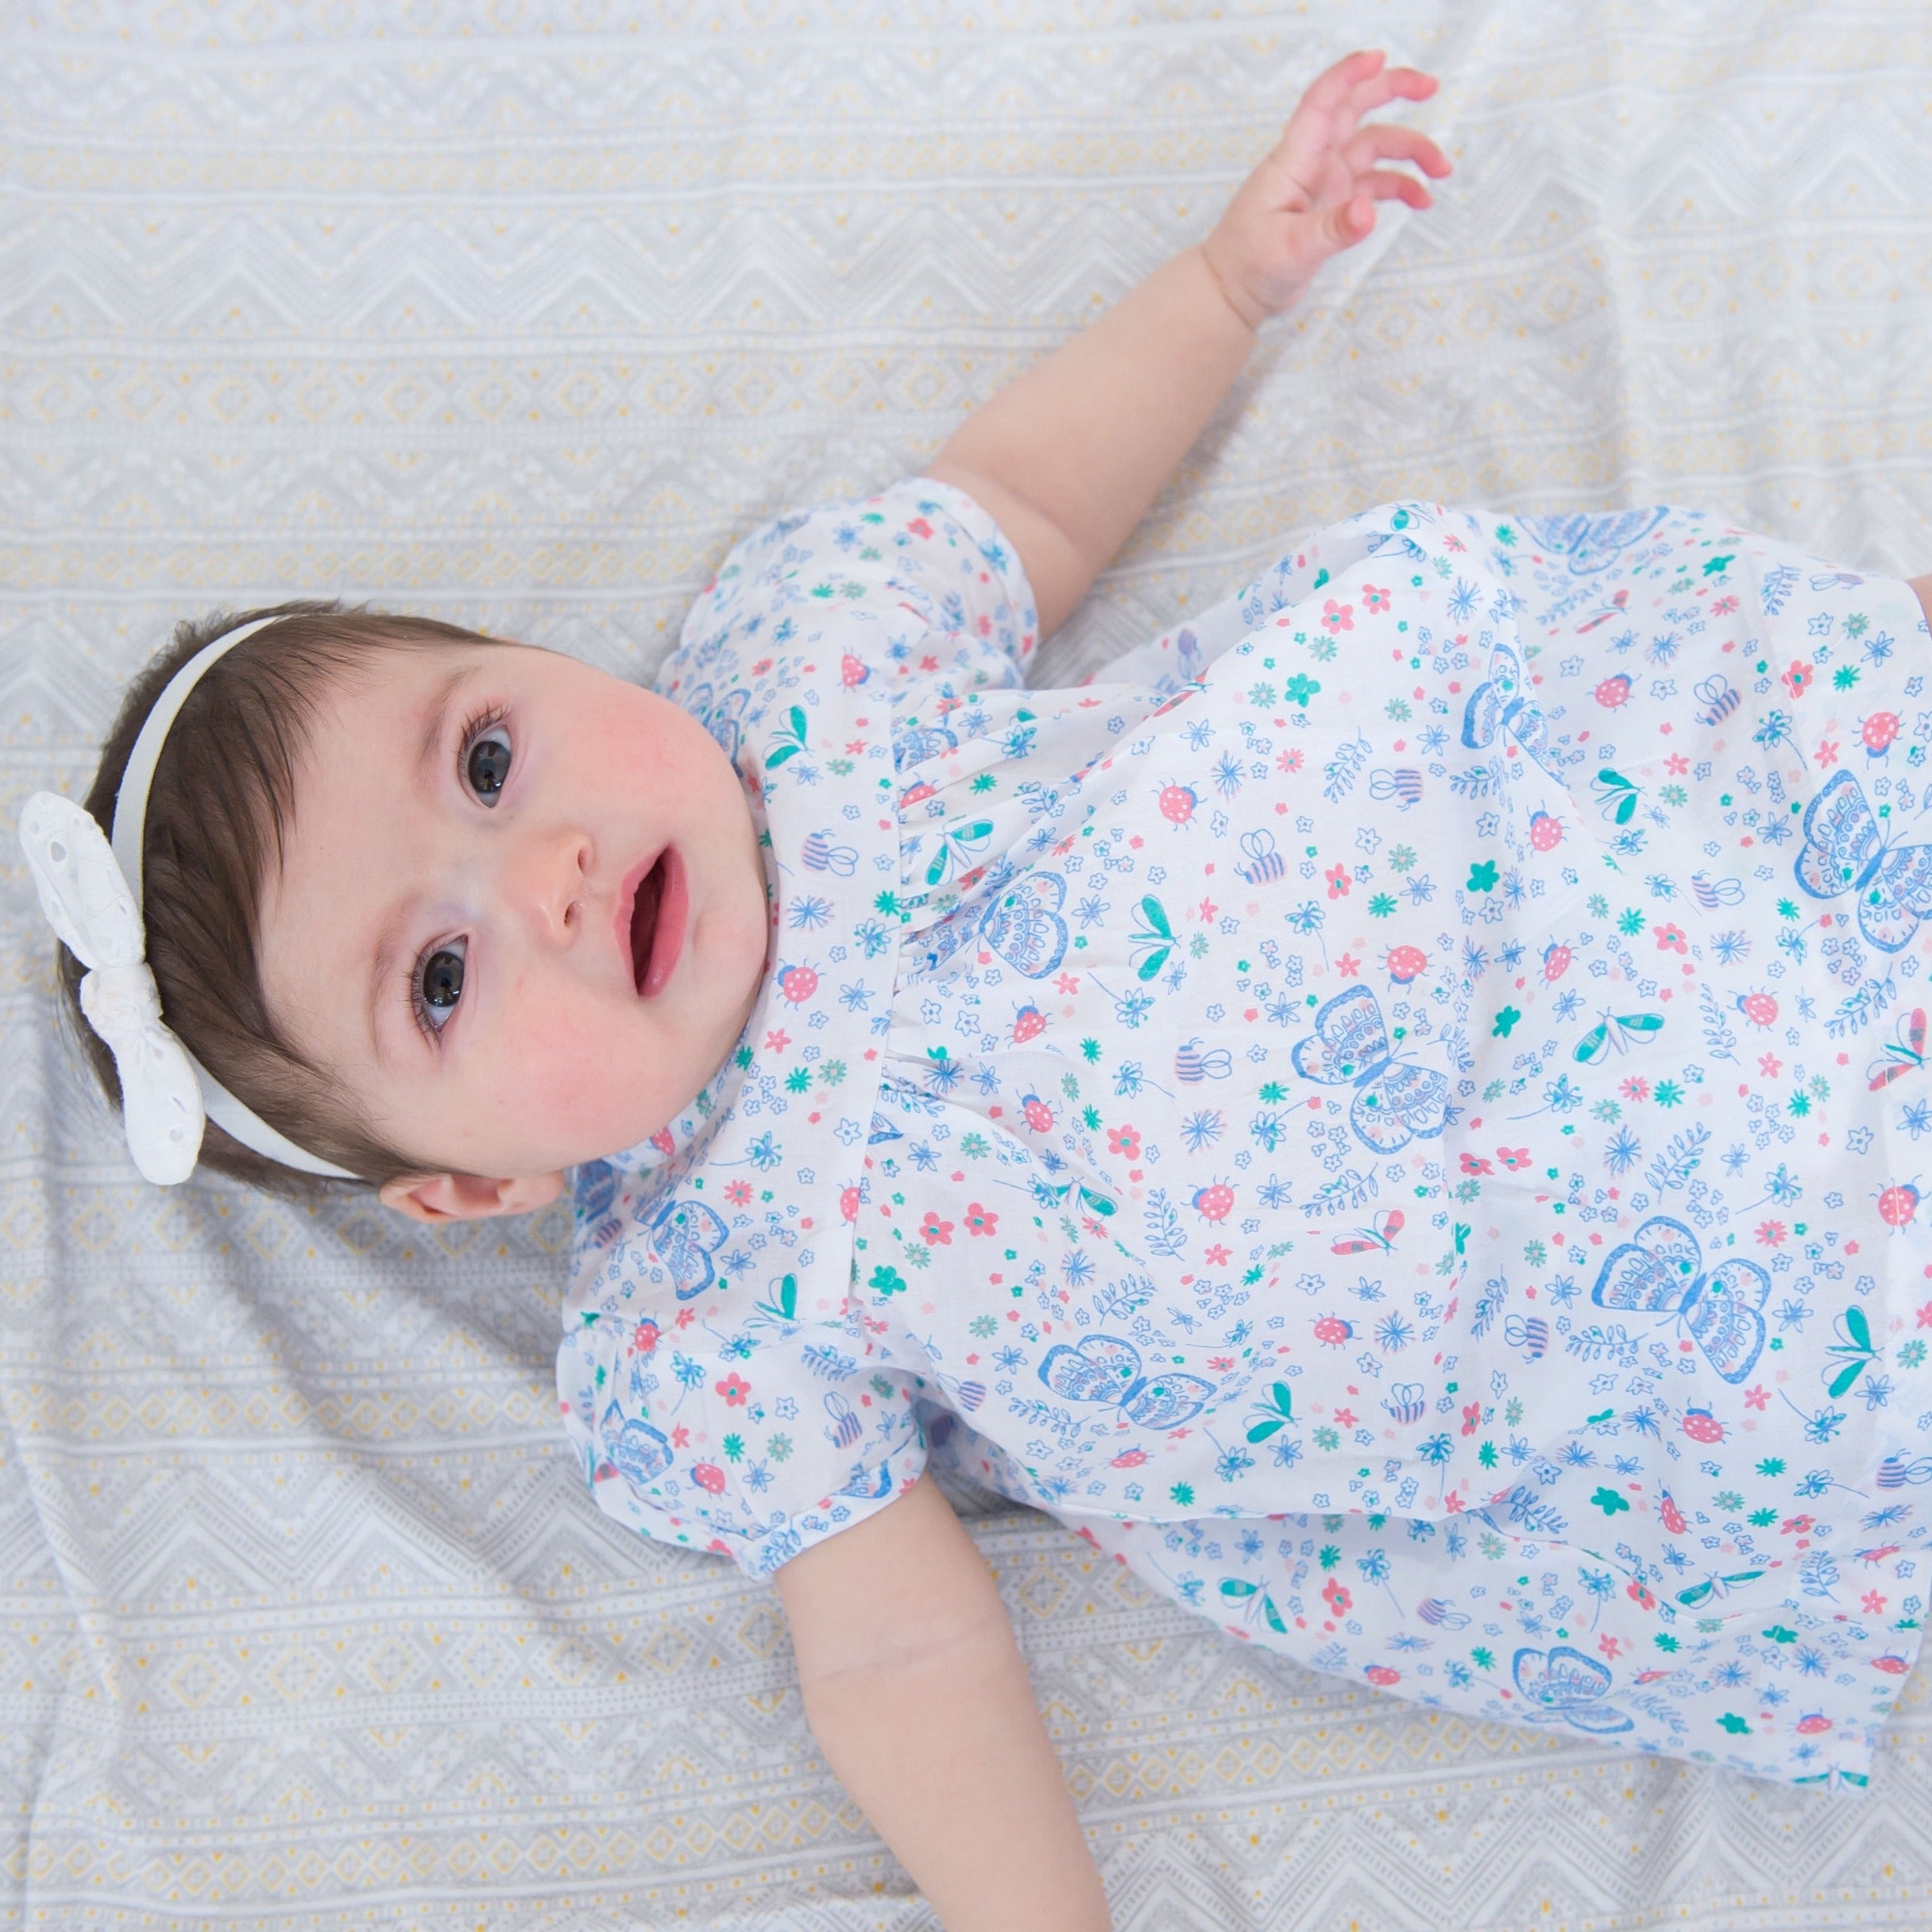 Newborn Baby Dress Cotton Sleeveless 6-12 months 6016 Online